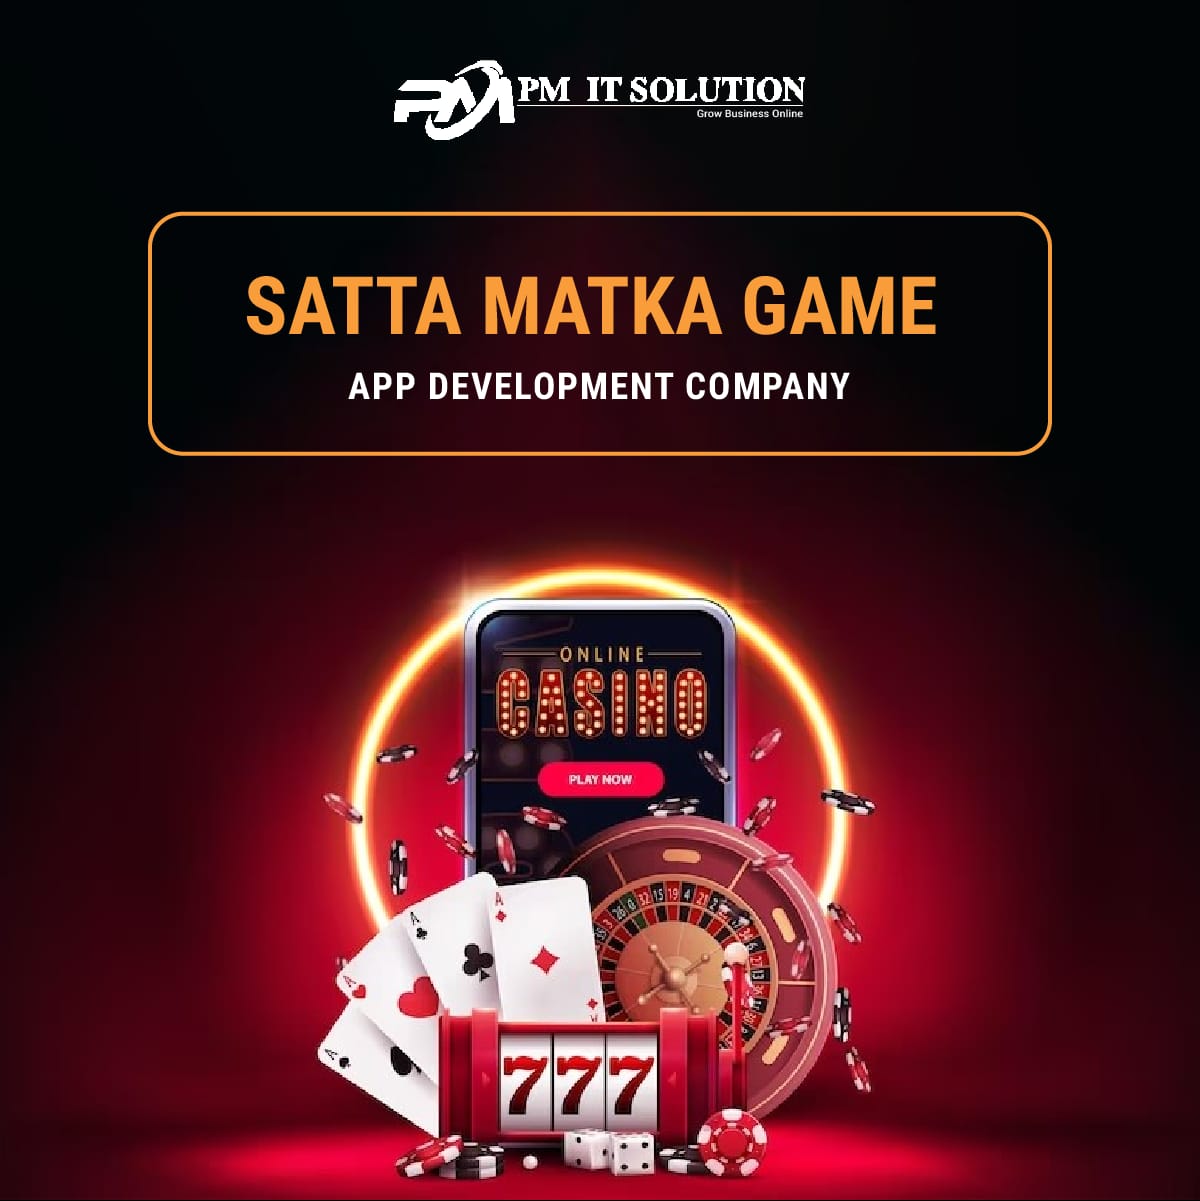 = ETB TN

SATTA MATKA GAME

APP DEVELOPMENT COMPANY